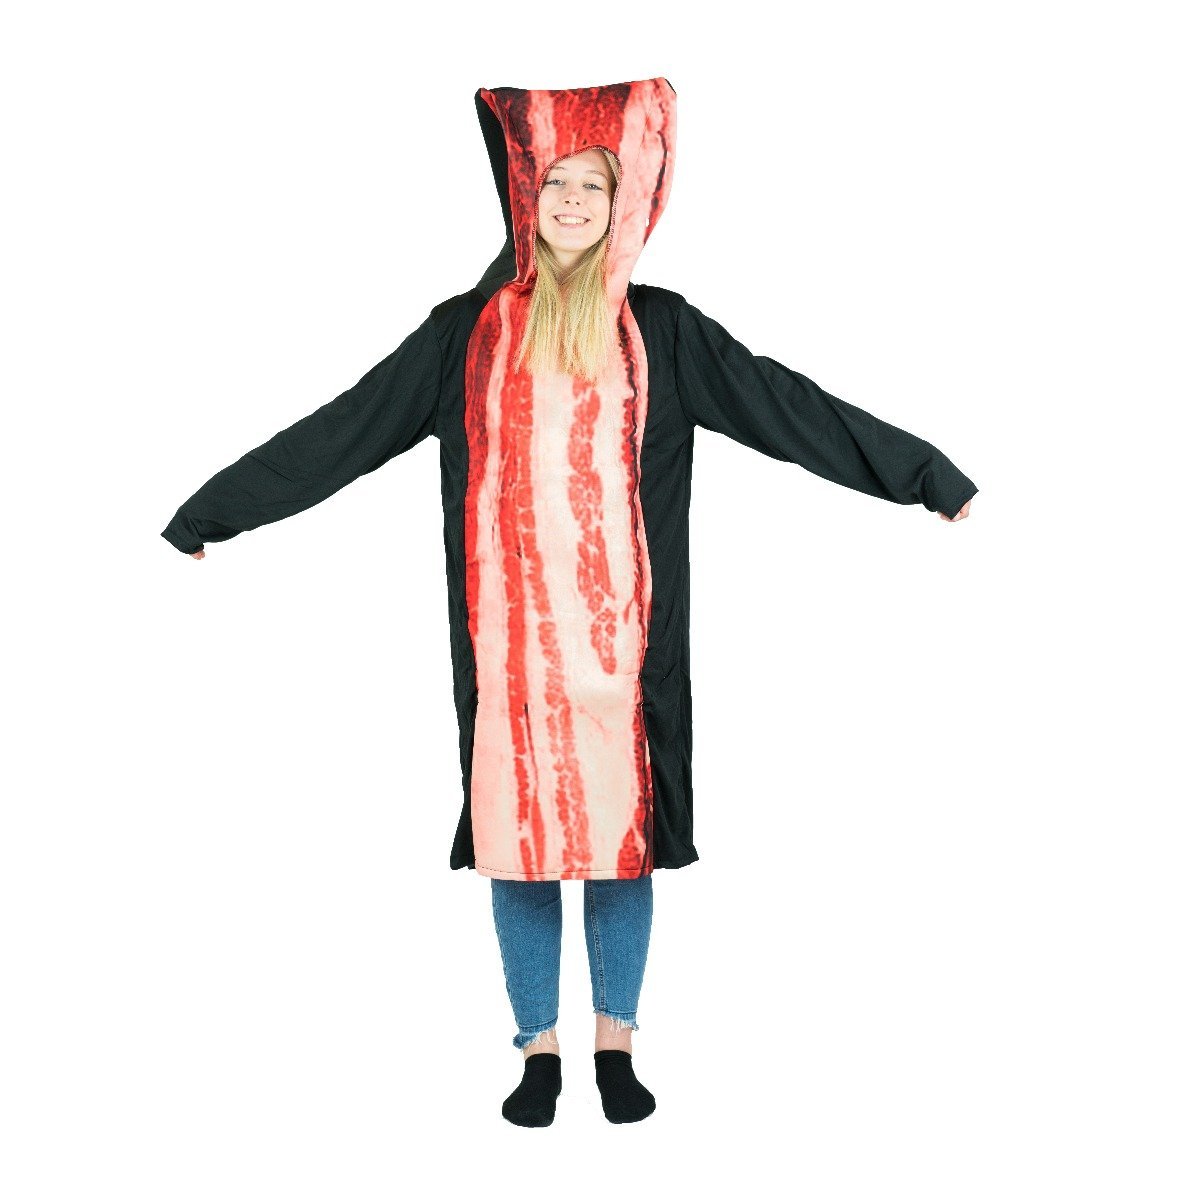 Bodysocks - Bacon Costume